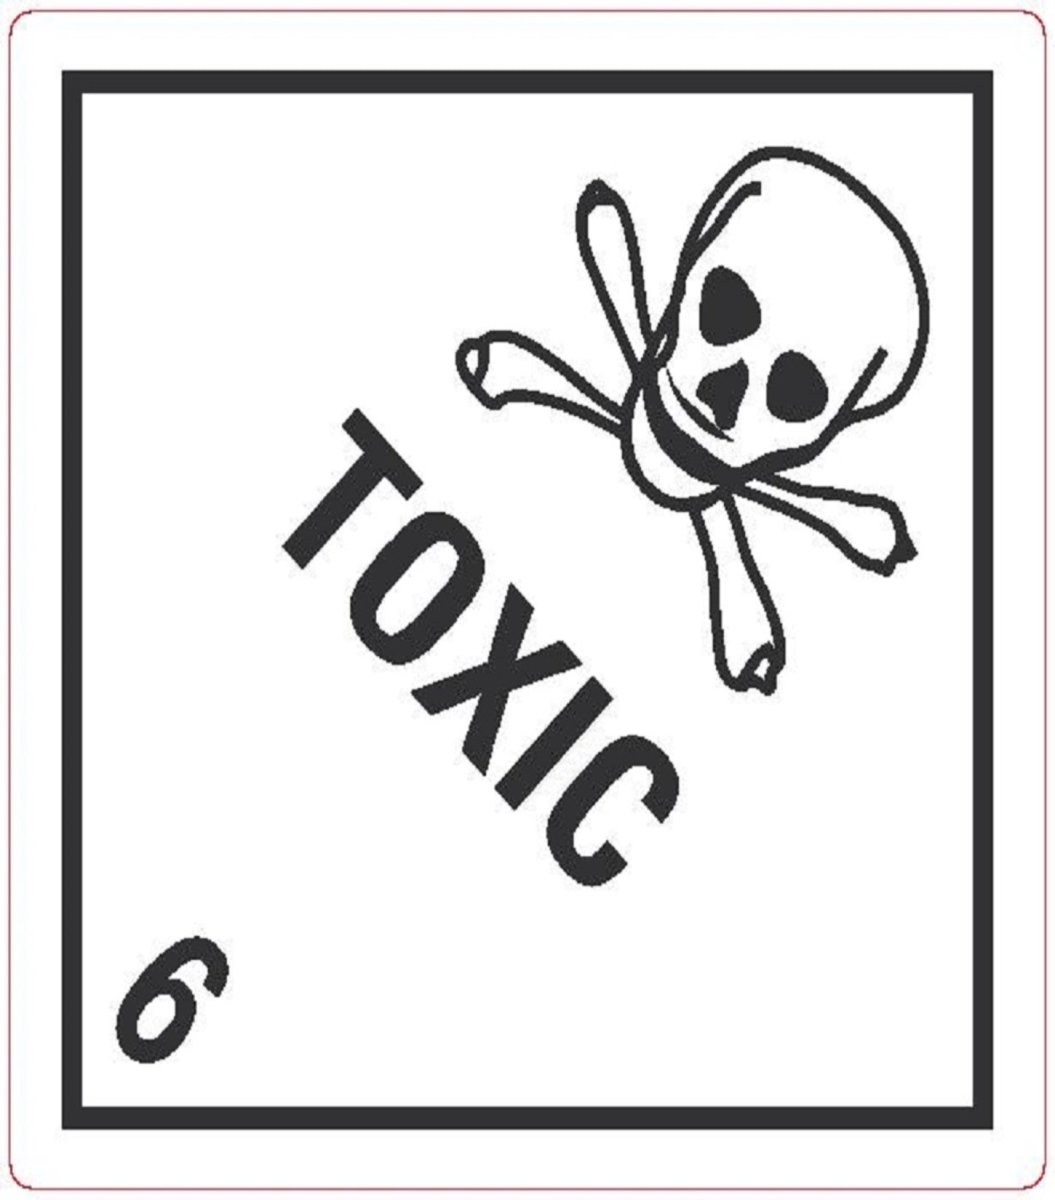 IMO 6.1 Toxic - SGS Netherlands